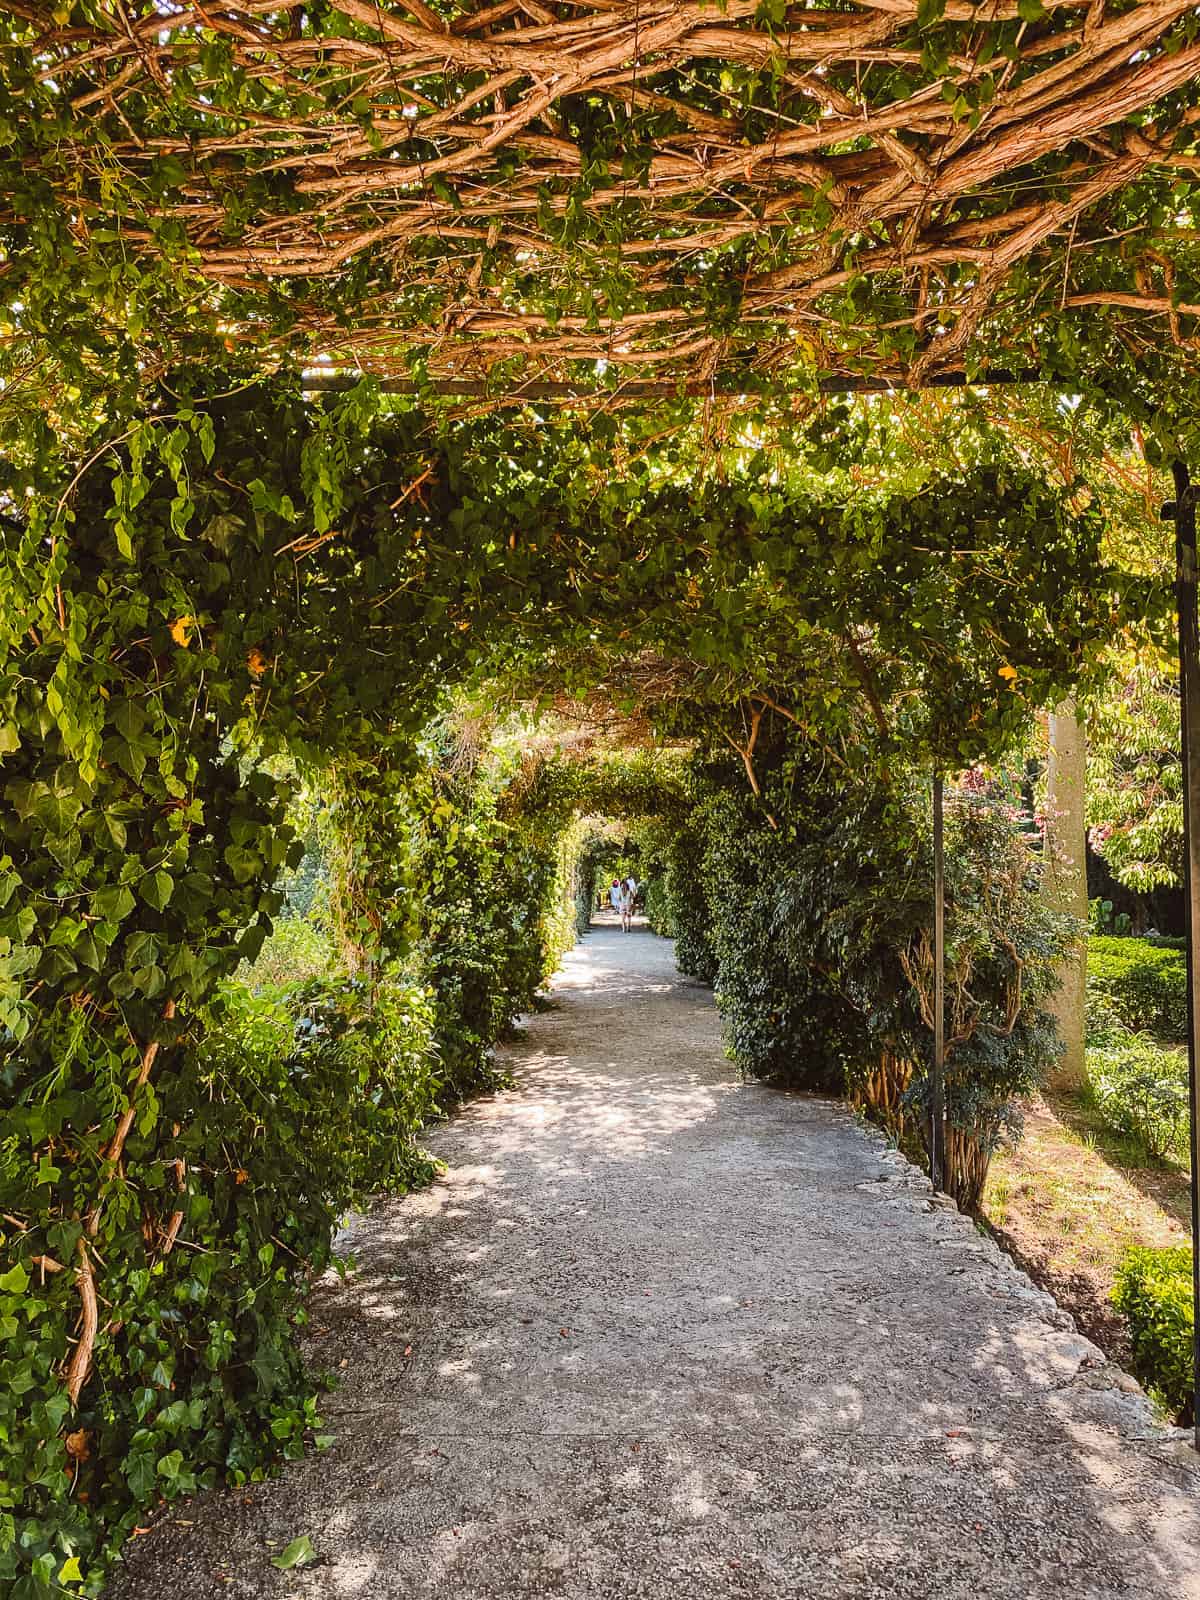 A beautiful outdoor garden hallway with ivy growing all around it at the Jardines de Alfabia